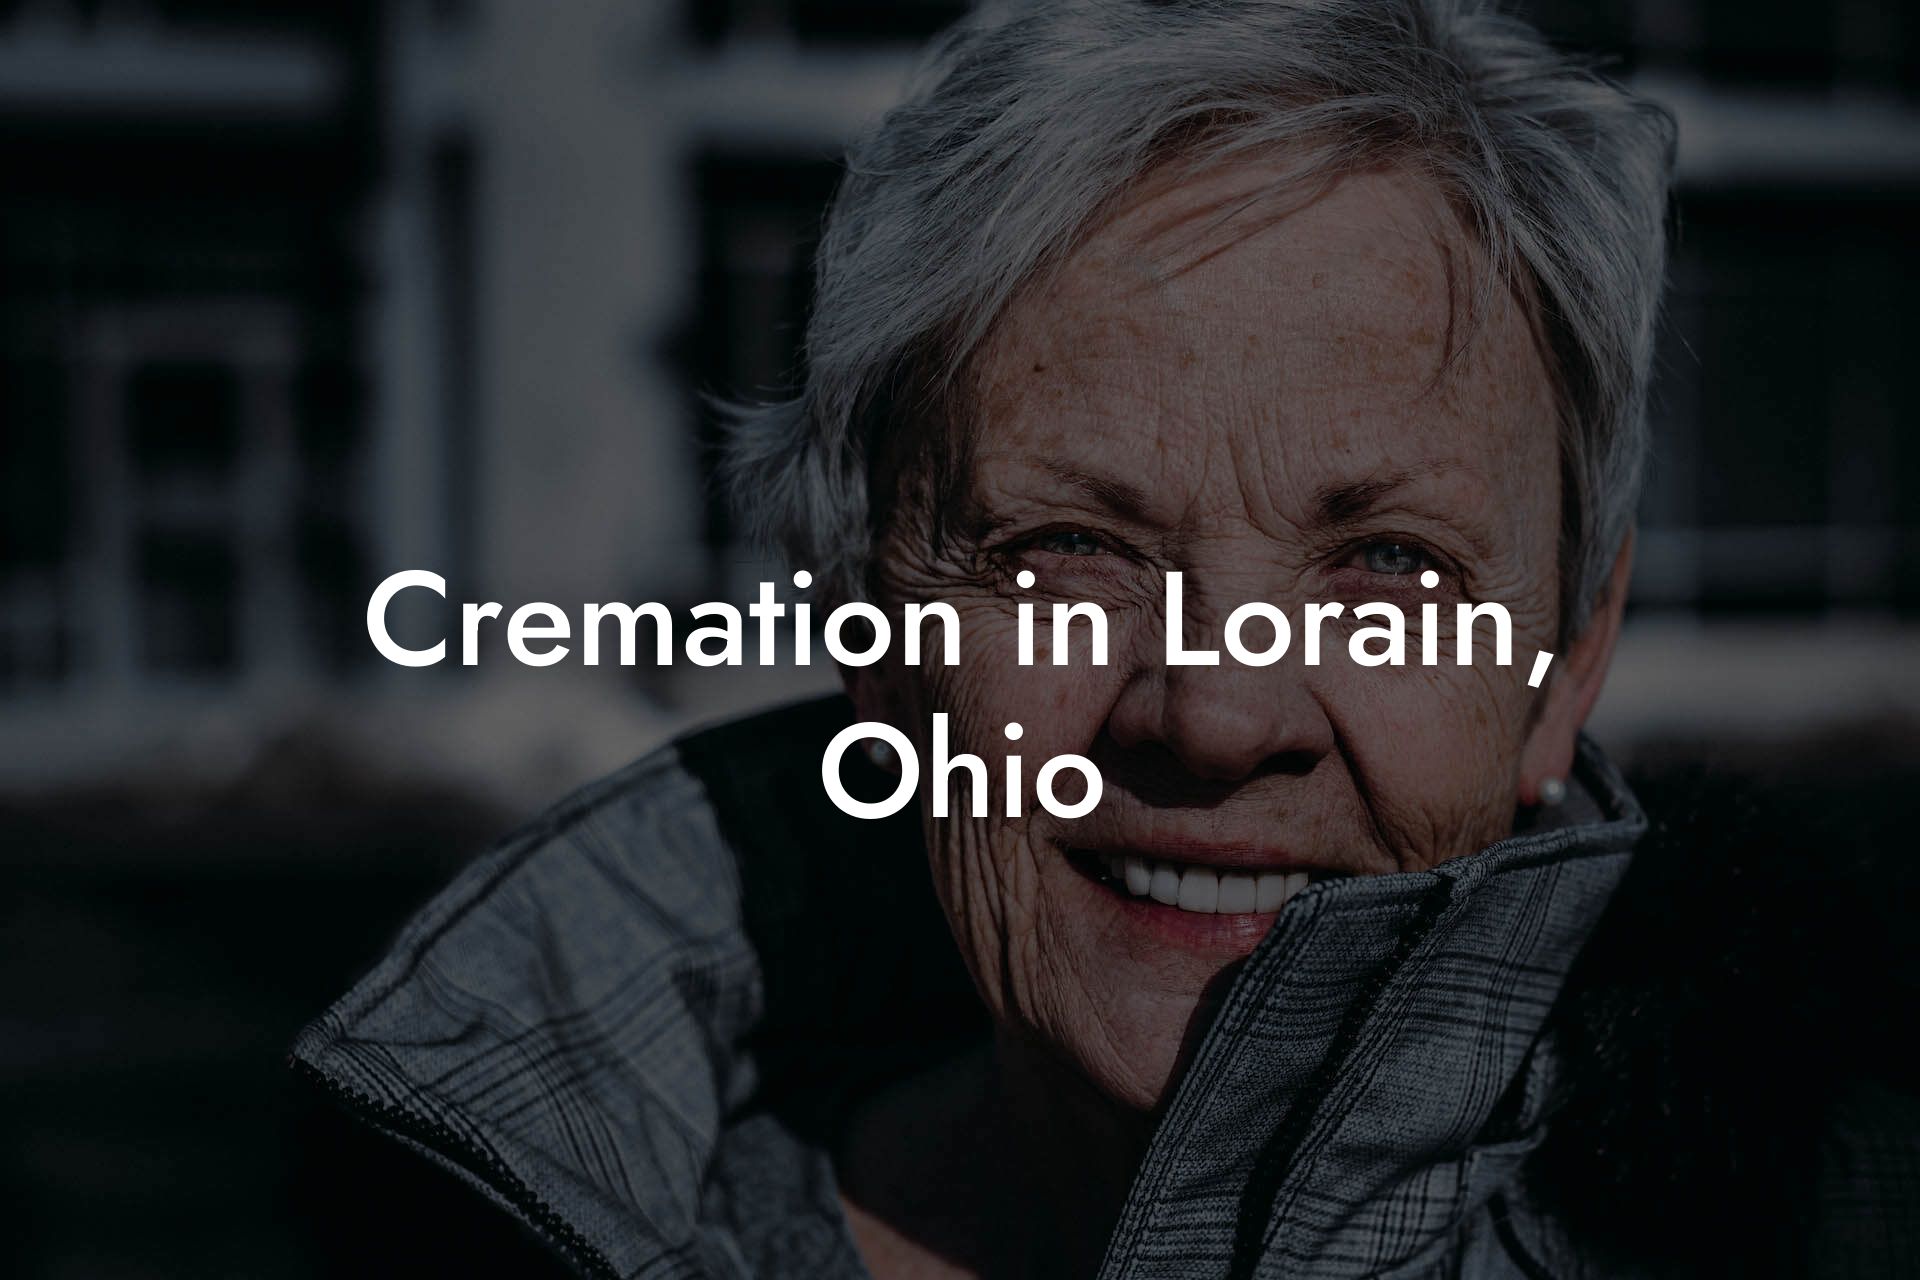 Cremation in Lorain, Ohio